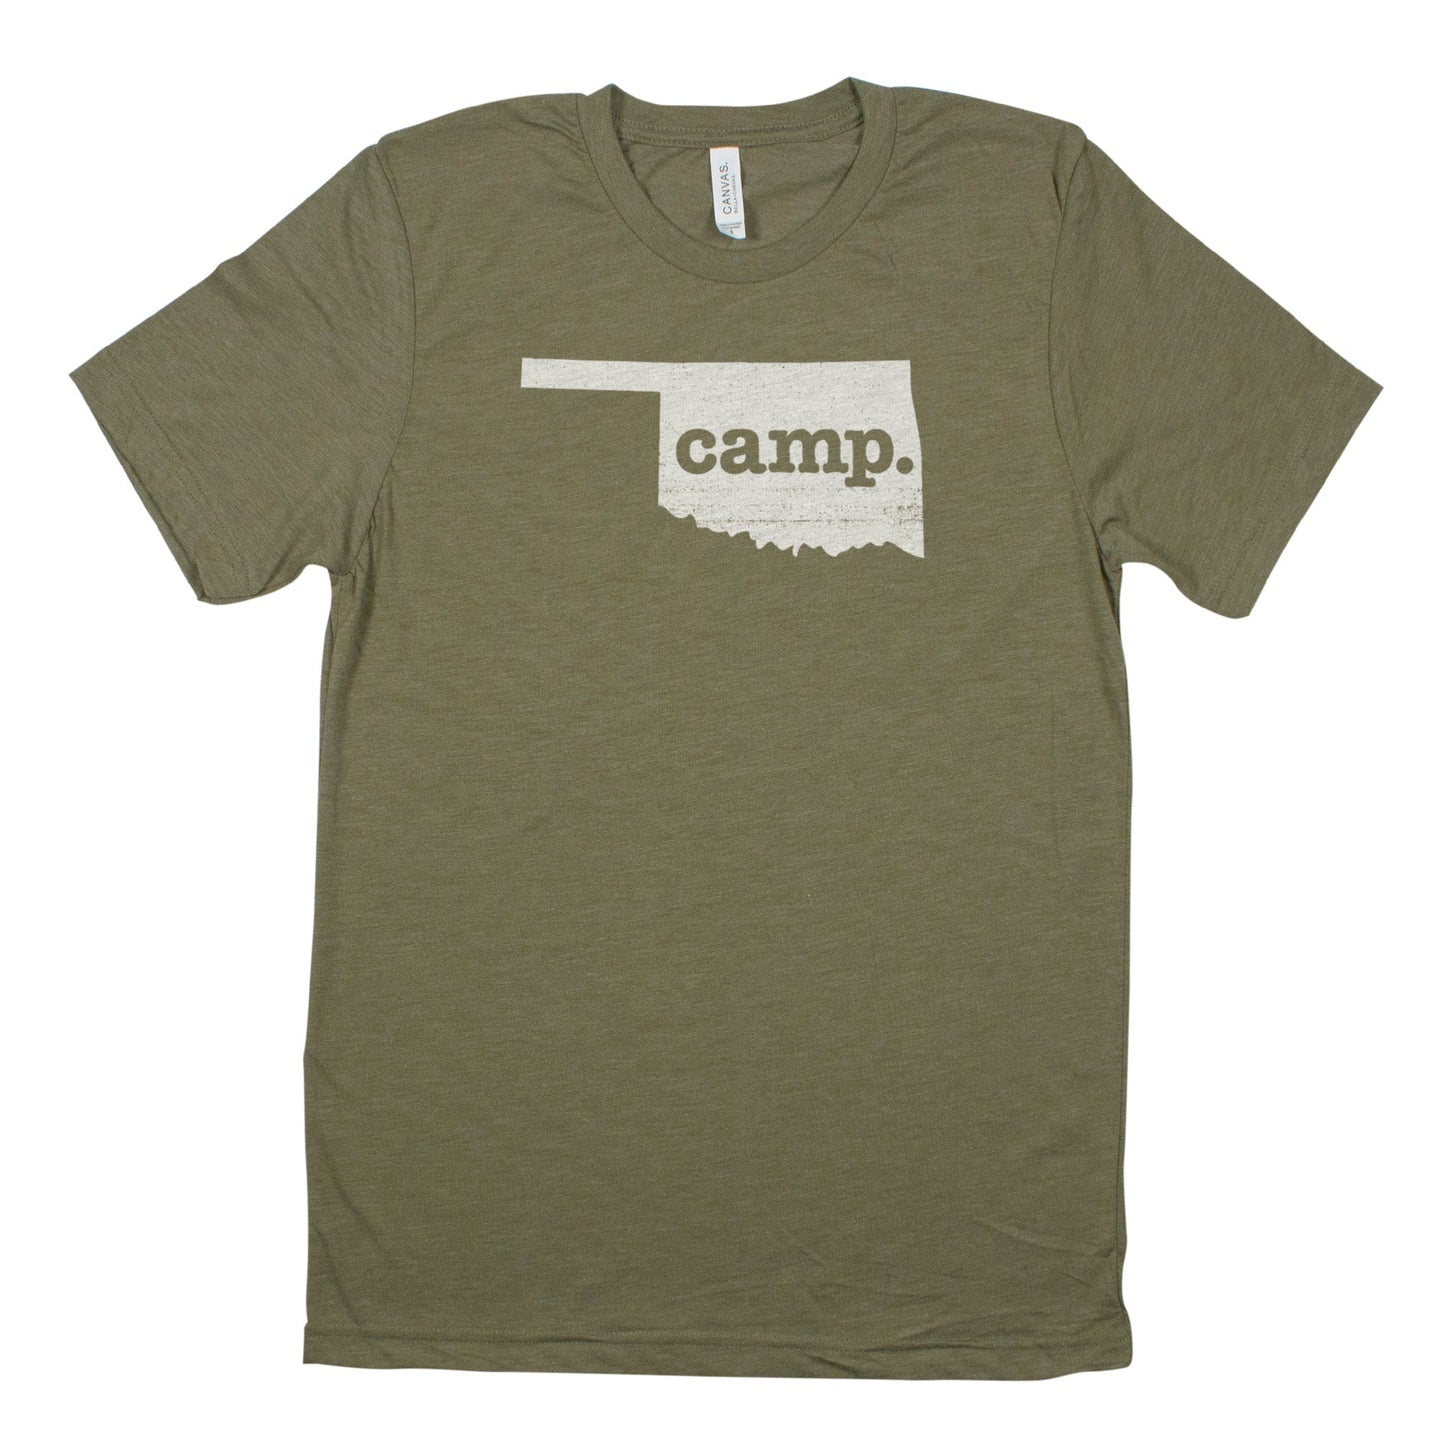 camp. Men's Unisex T-Shirt - Oklahoma